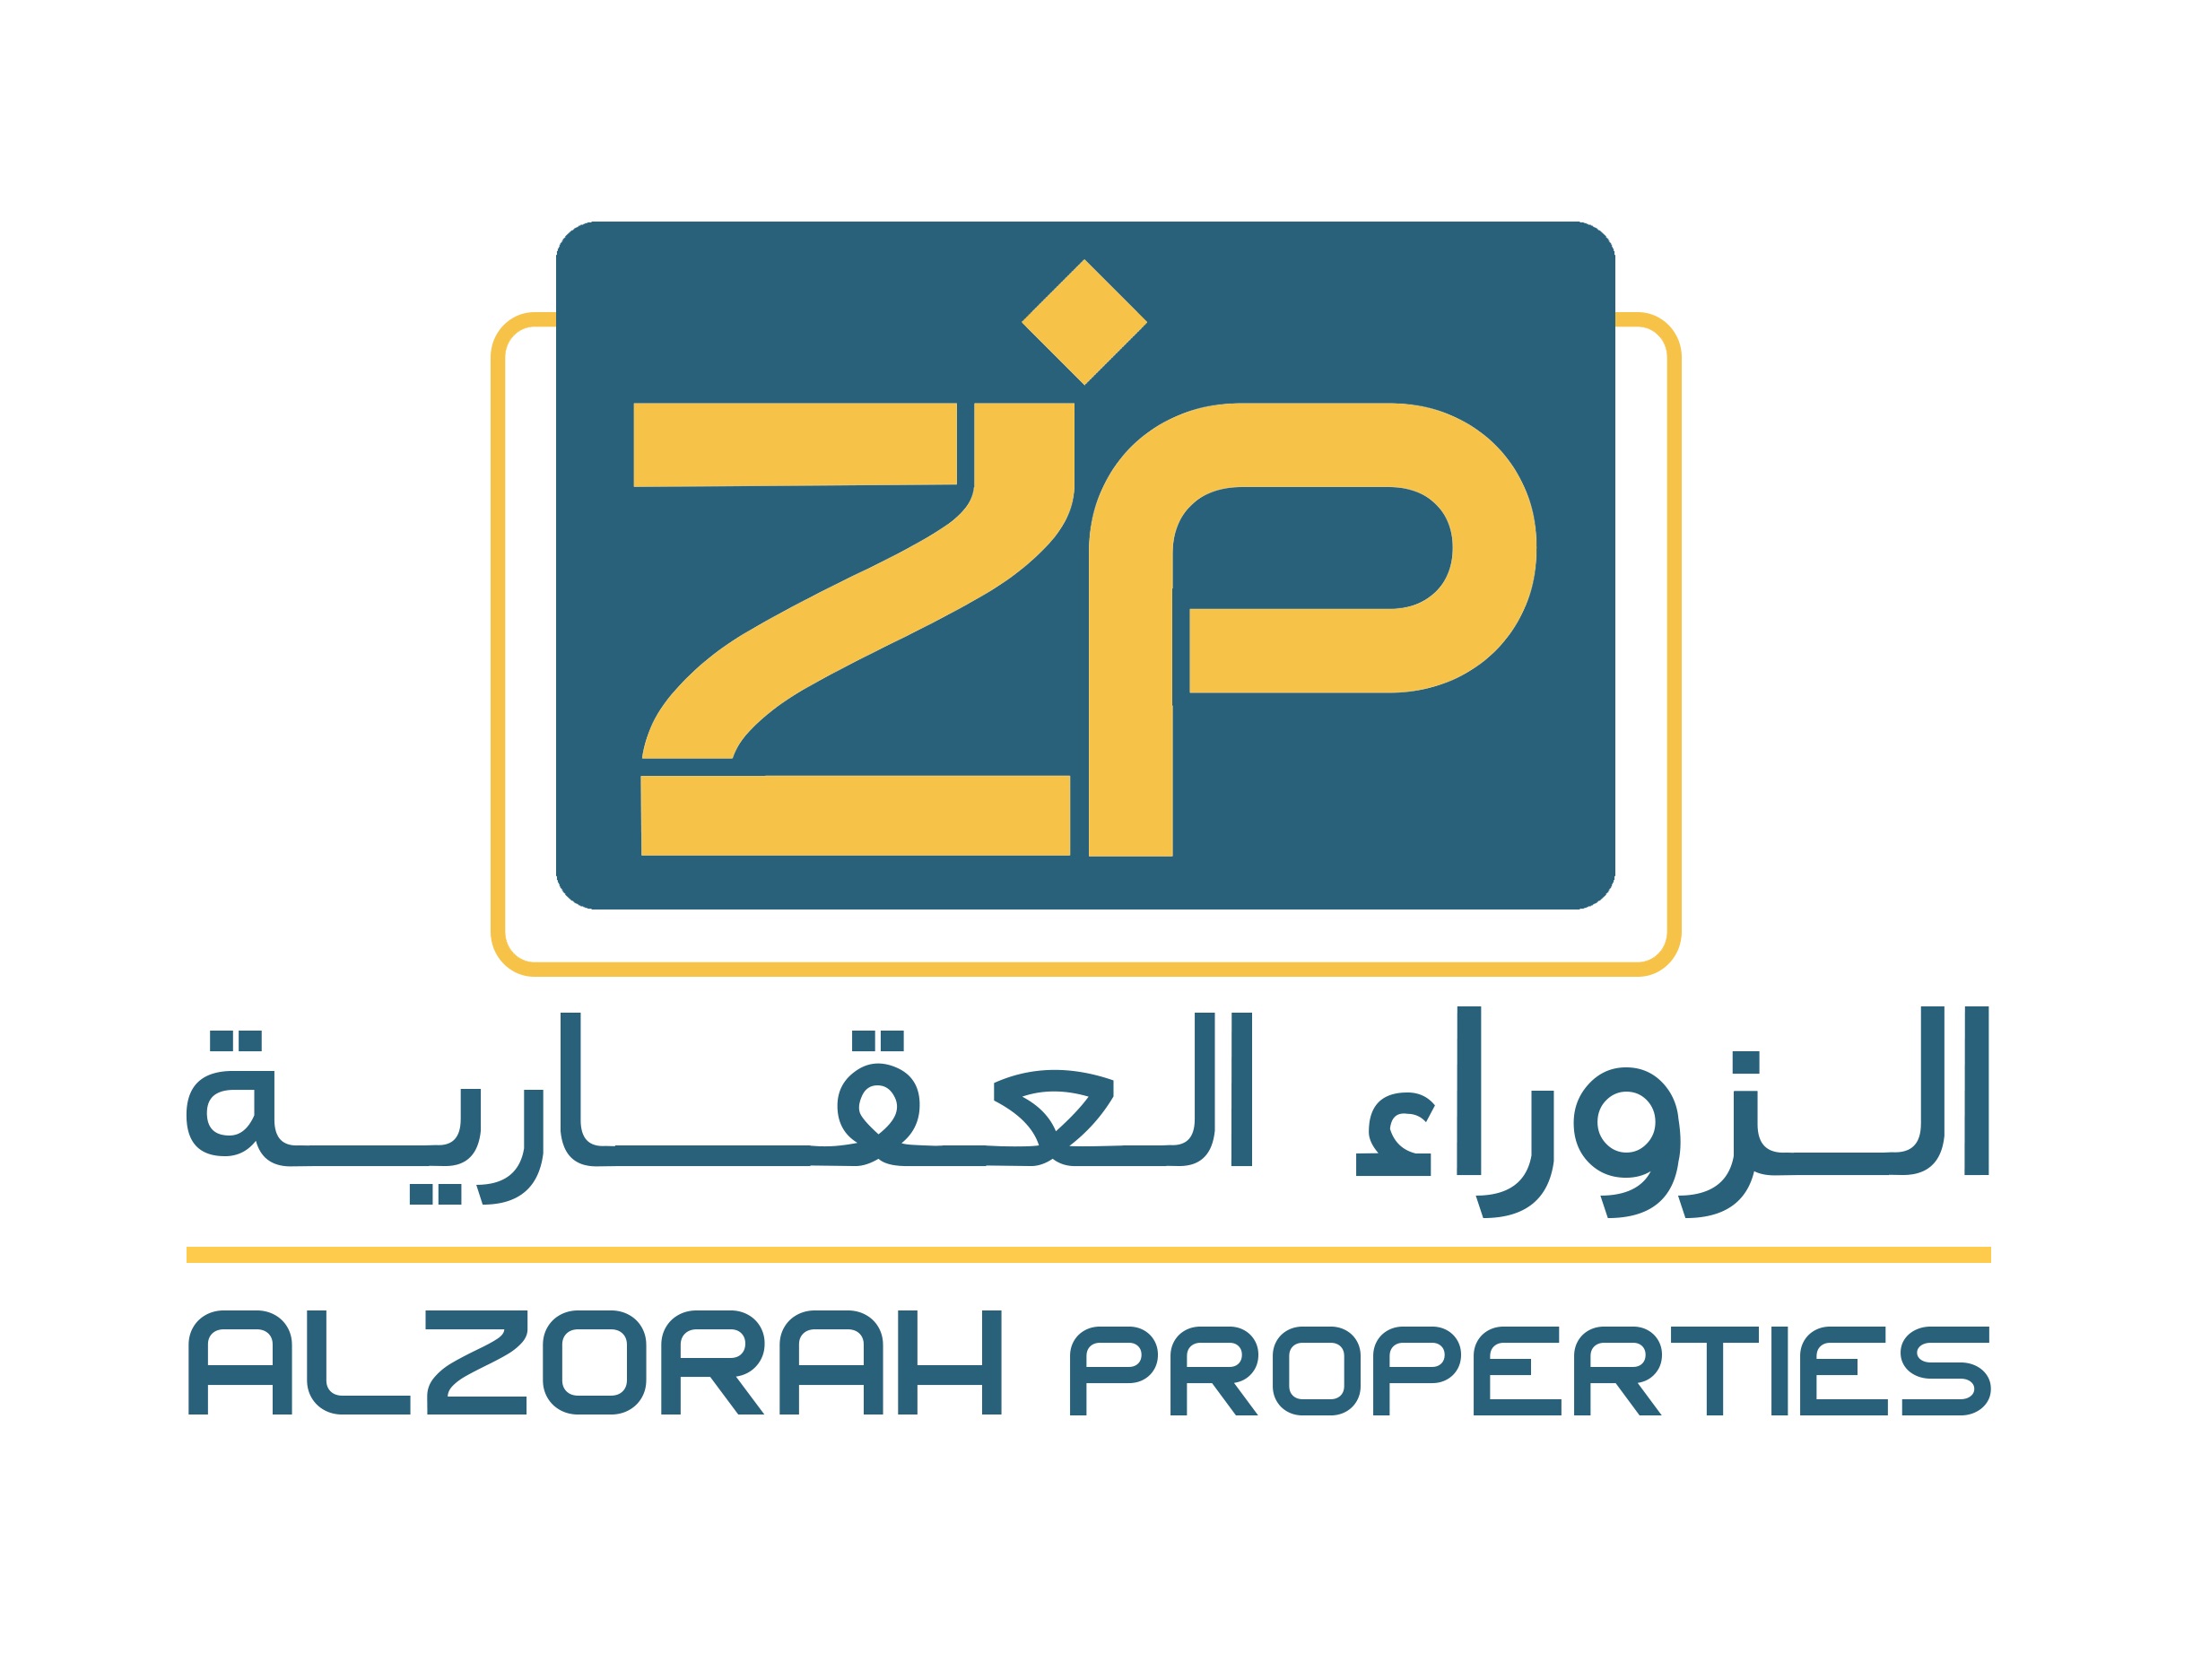 AL ZORAH Properties